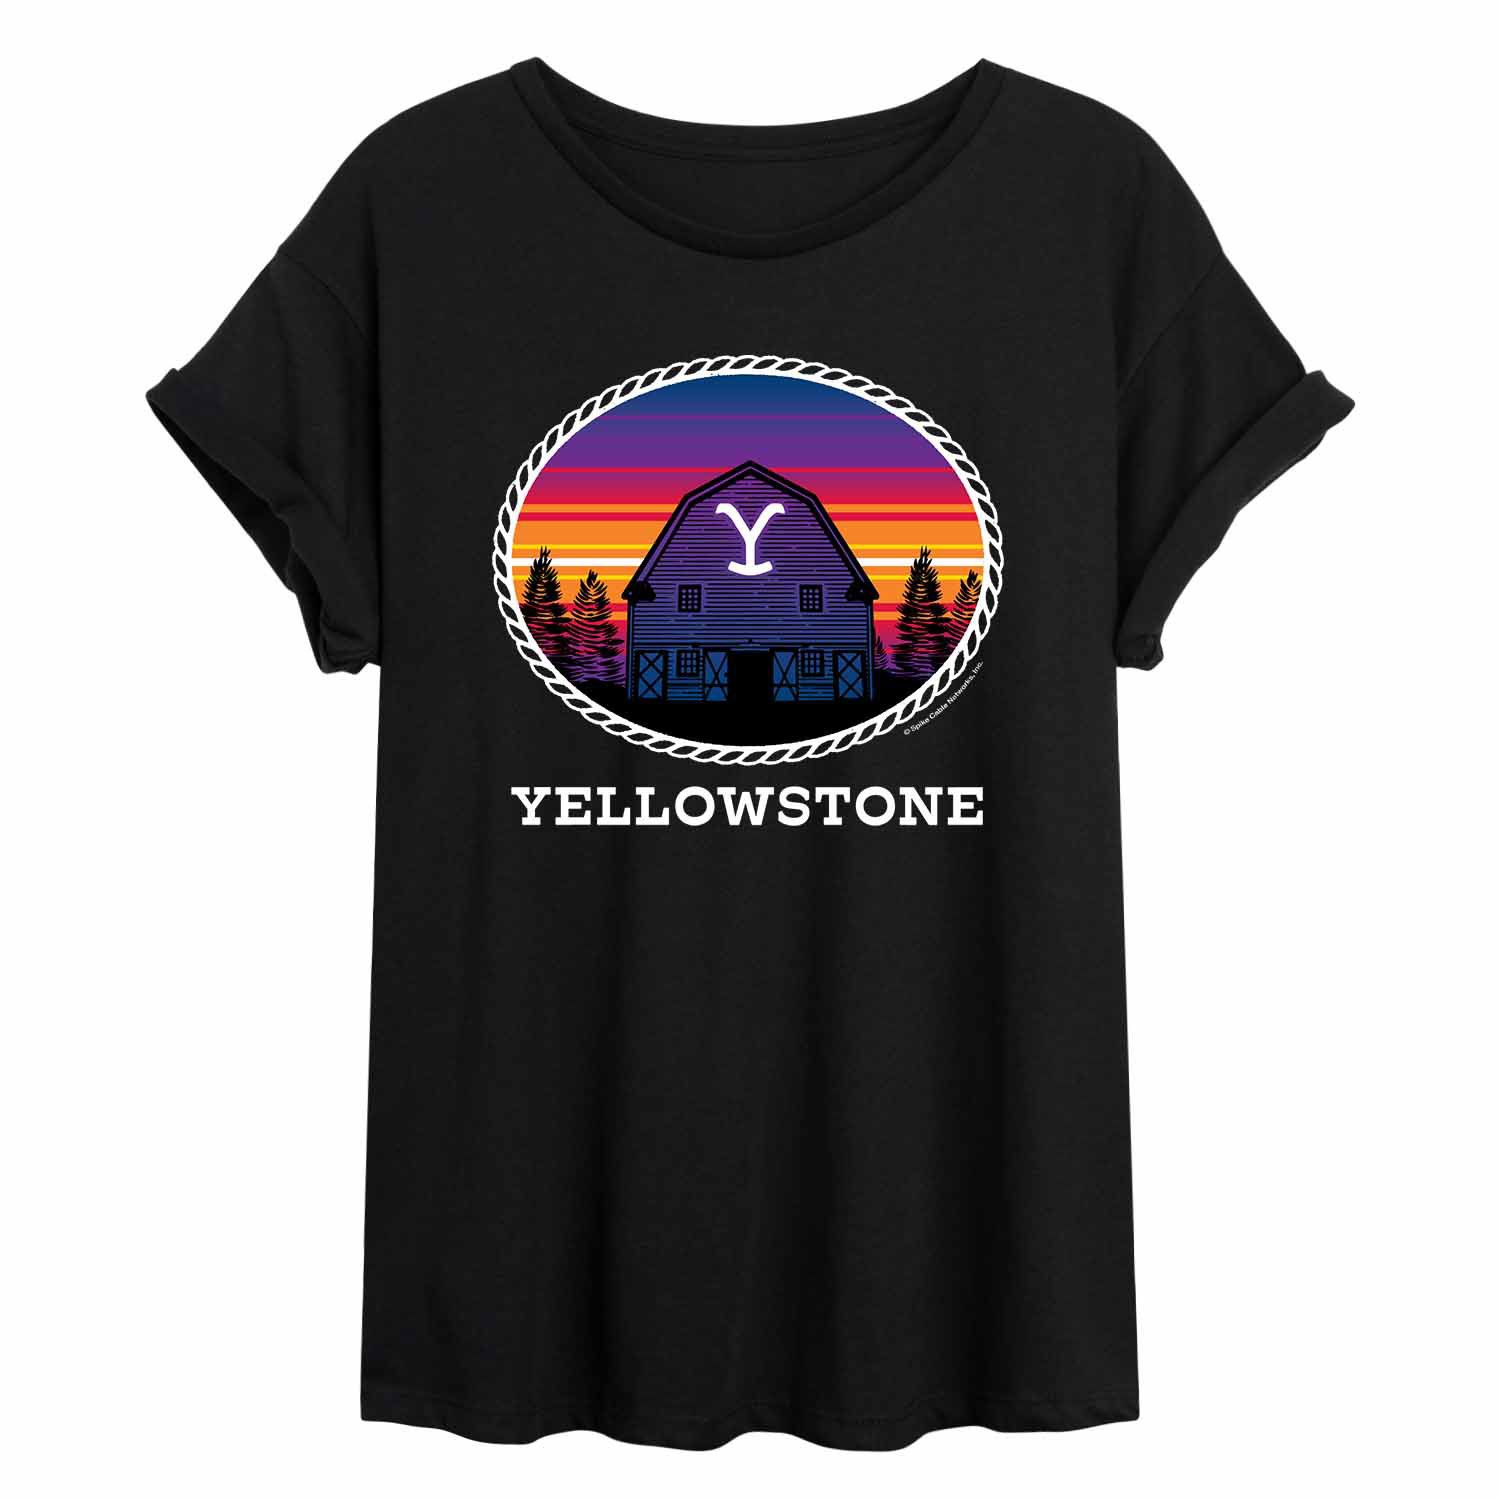 Юниорская футболка Yellowstone Sunset с струящимся рисунком Licensed Character